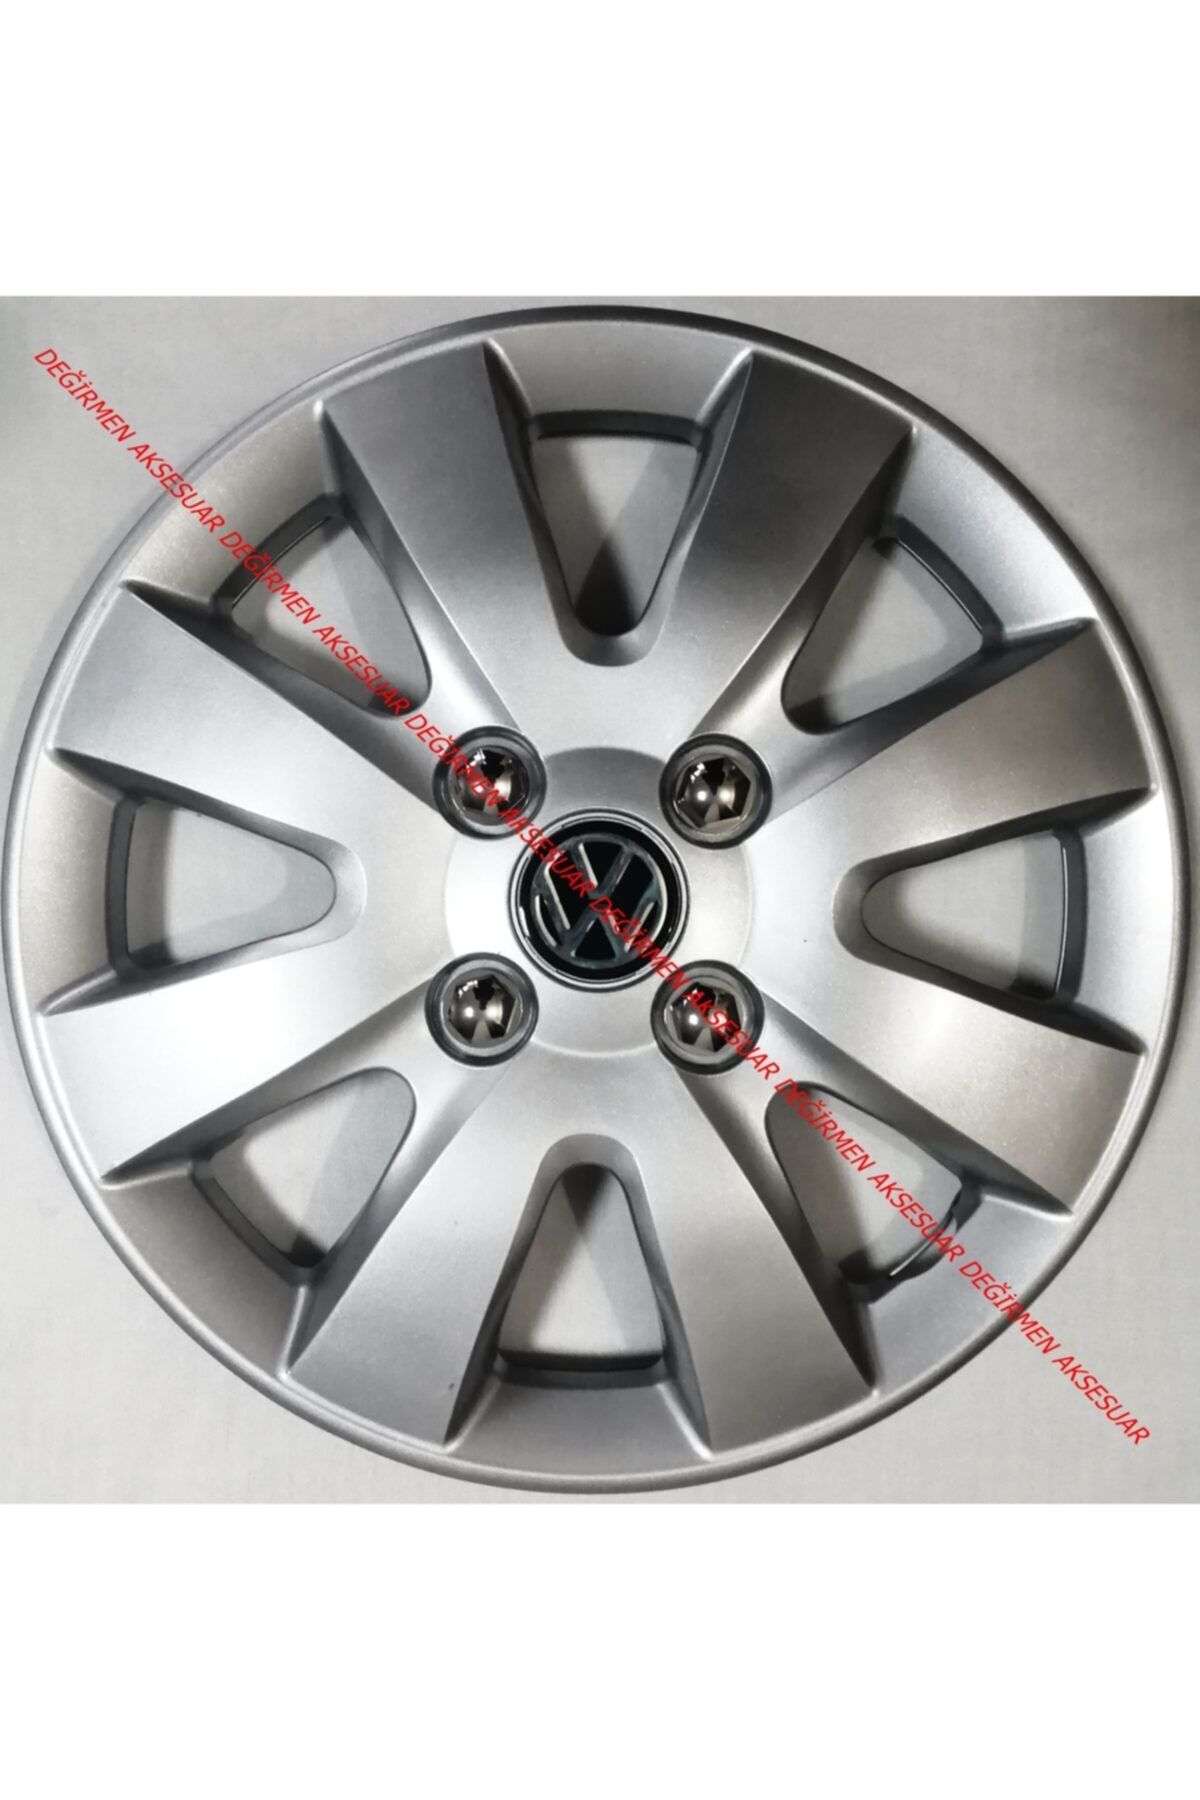 DGR Volkswagen Caddy Uyumlu 14 Inç Jant Kapağı Takımı